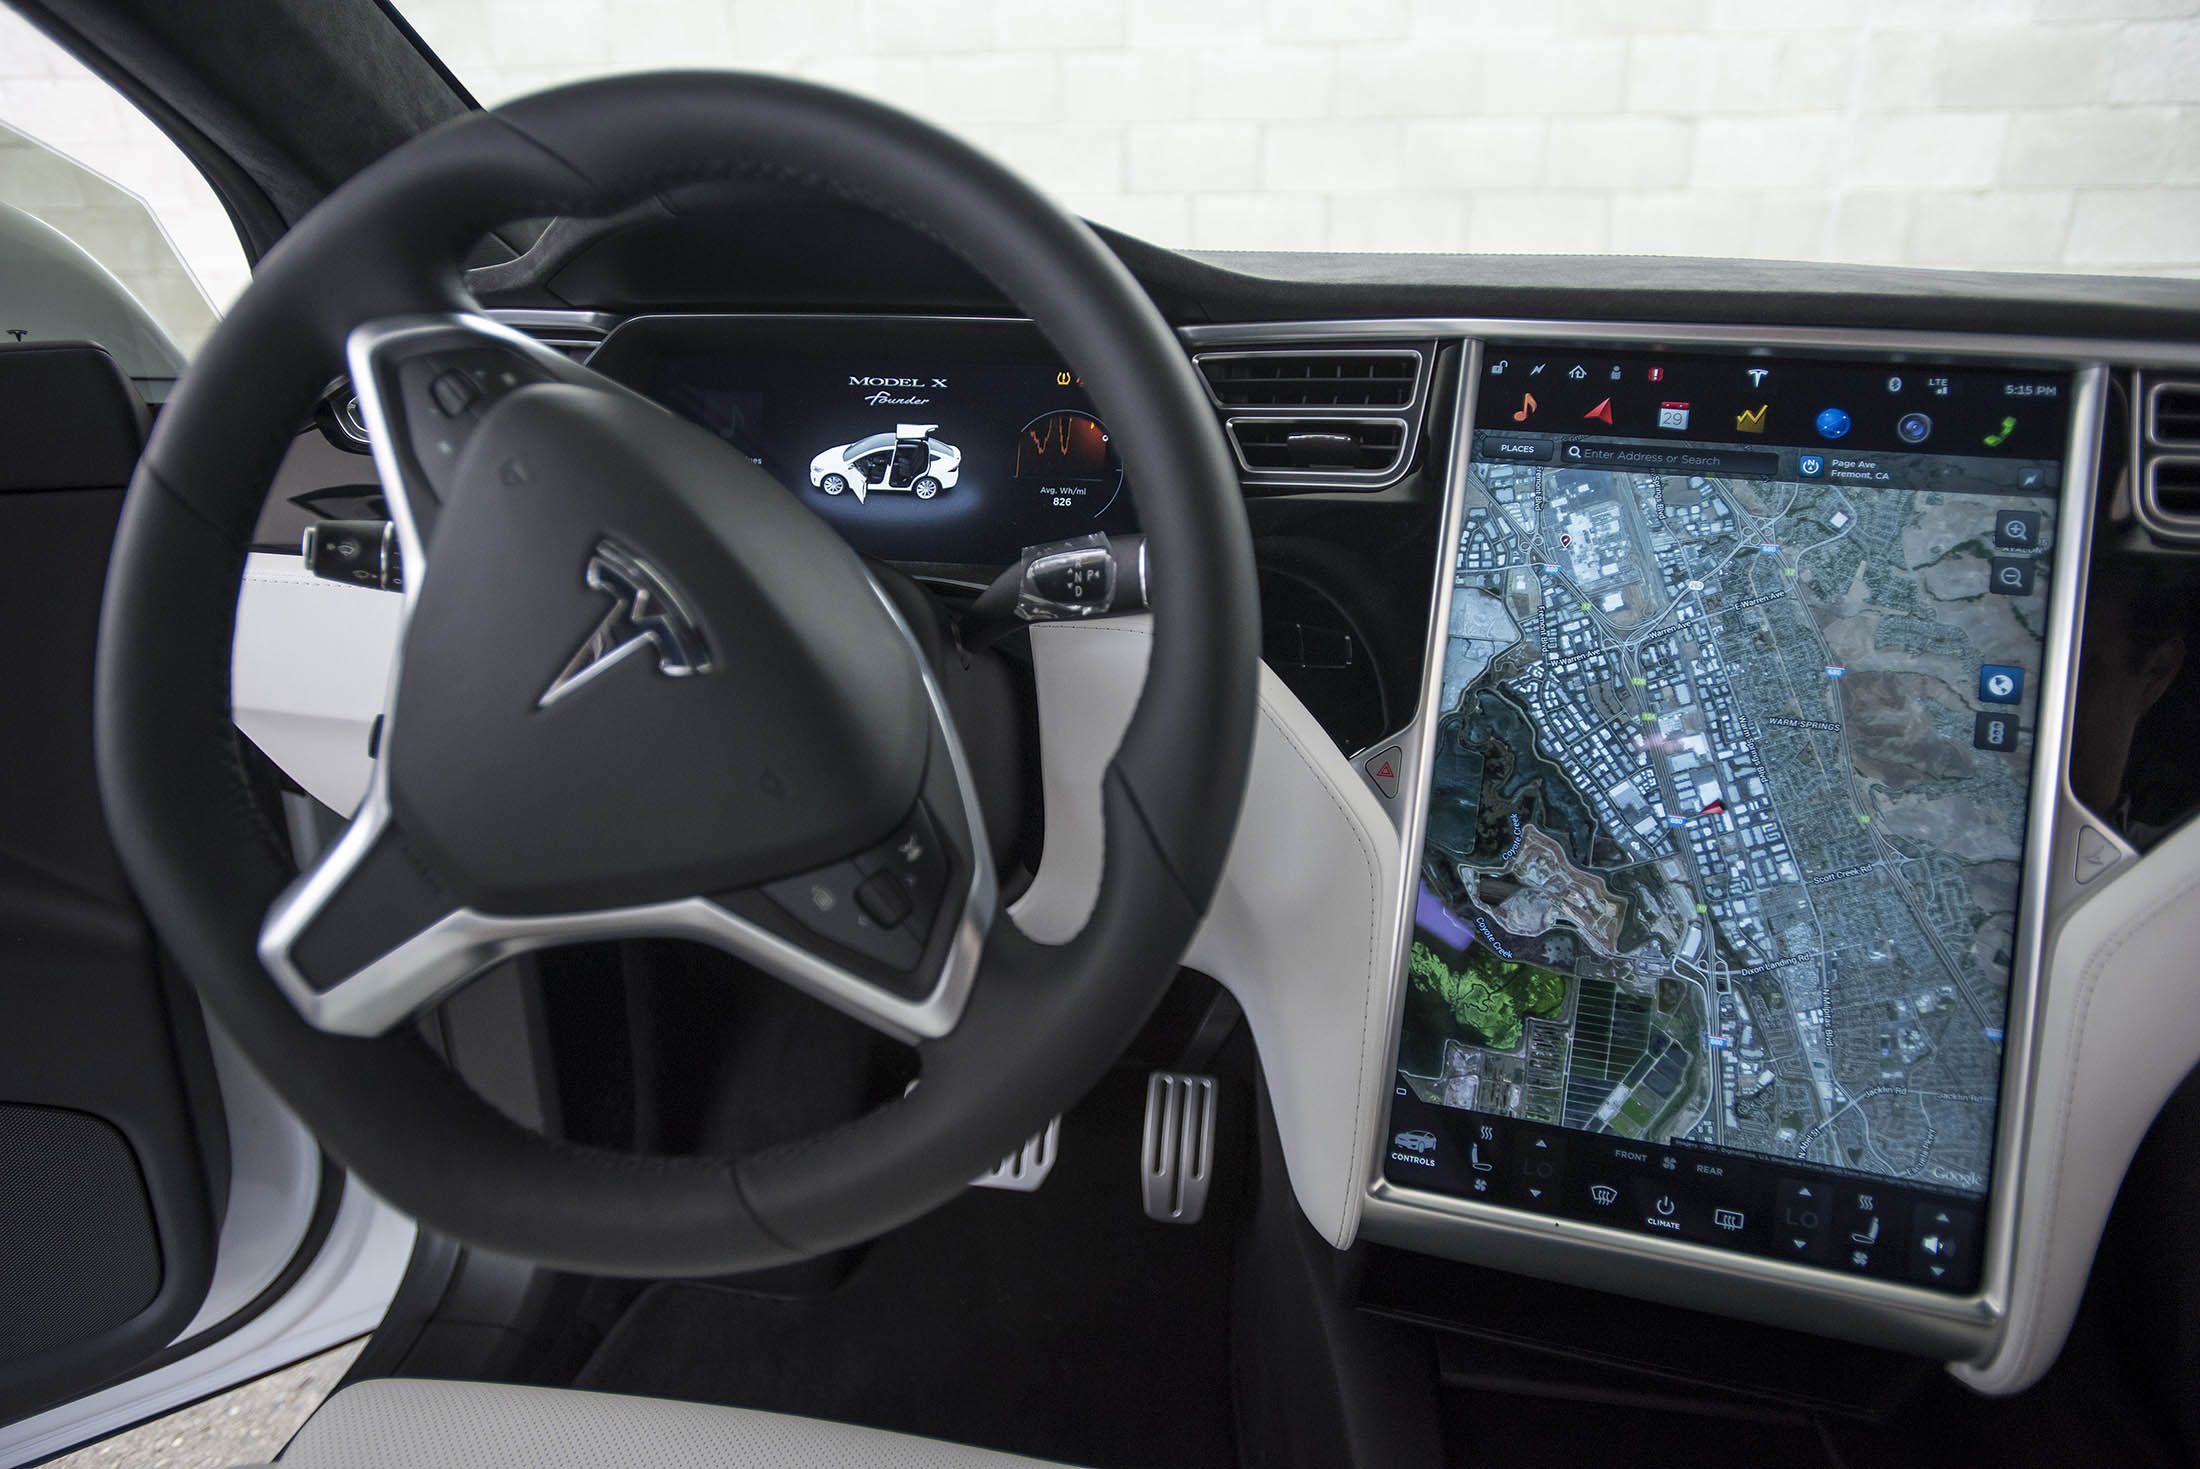 The interior of the Tesla Motors Model X SUV